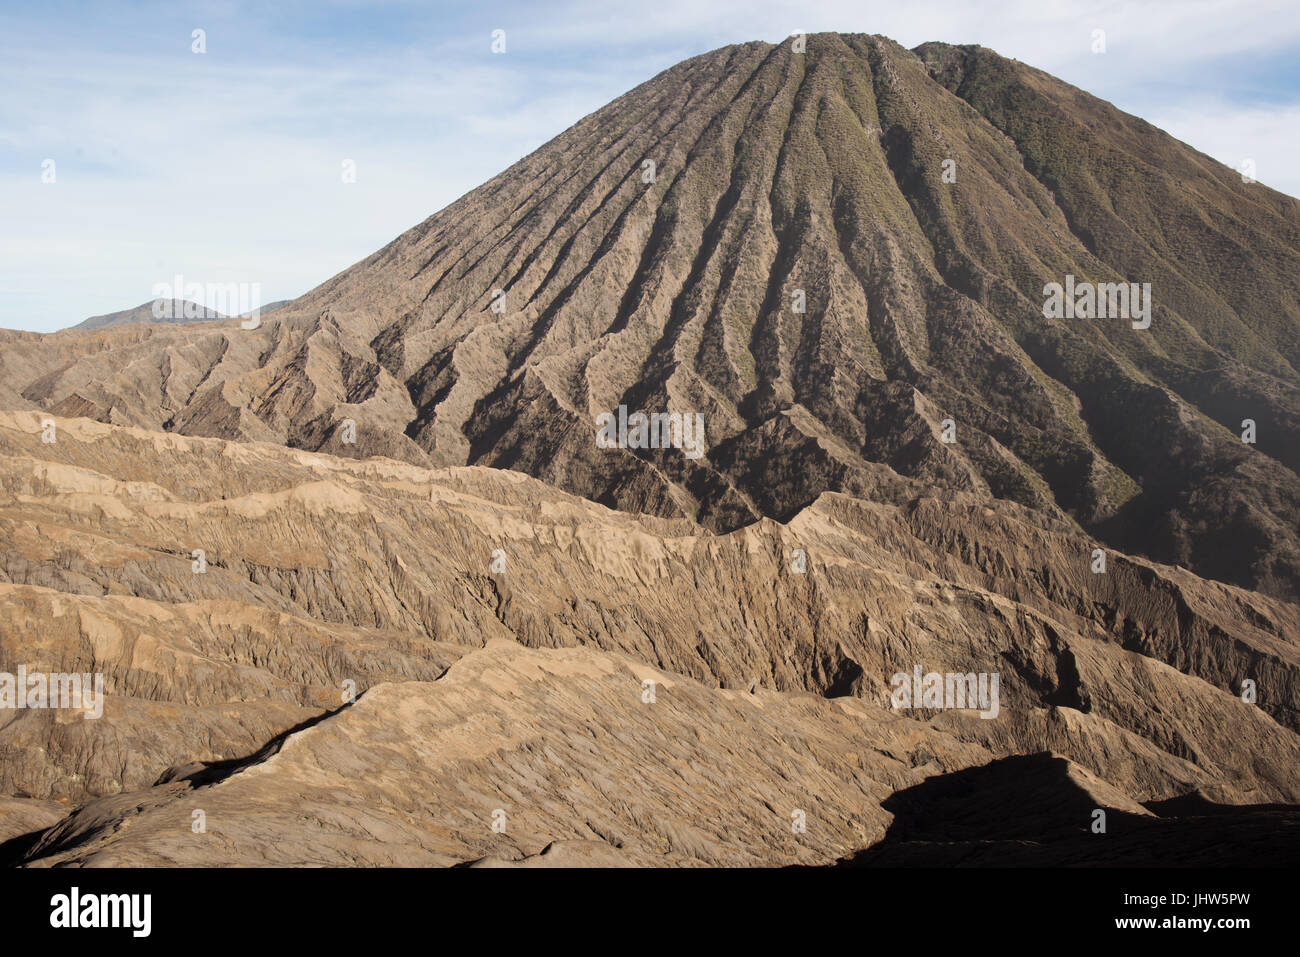 Vulkankegel in der Caldeira des aktiven Vulkans Mount Bromo, Ost-Java Indonesien. Stockfoto